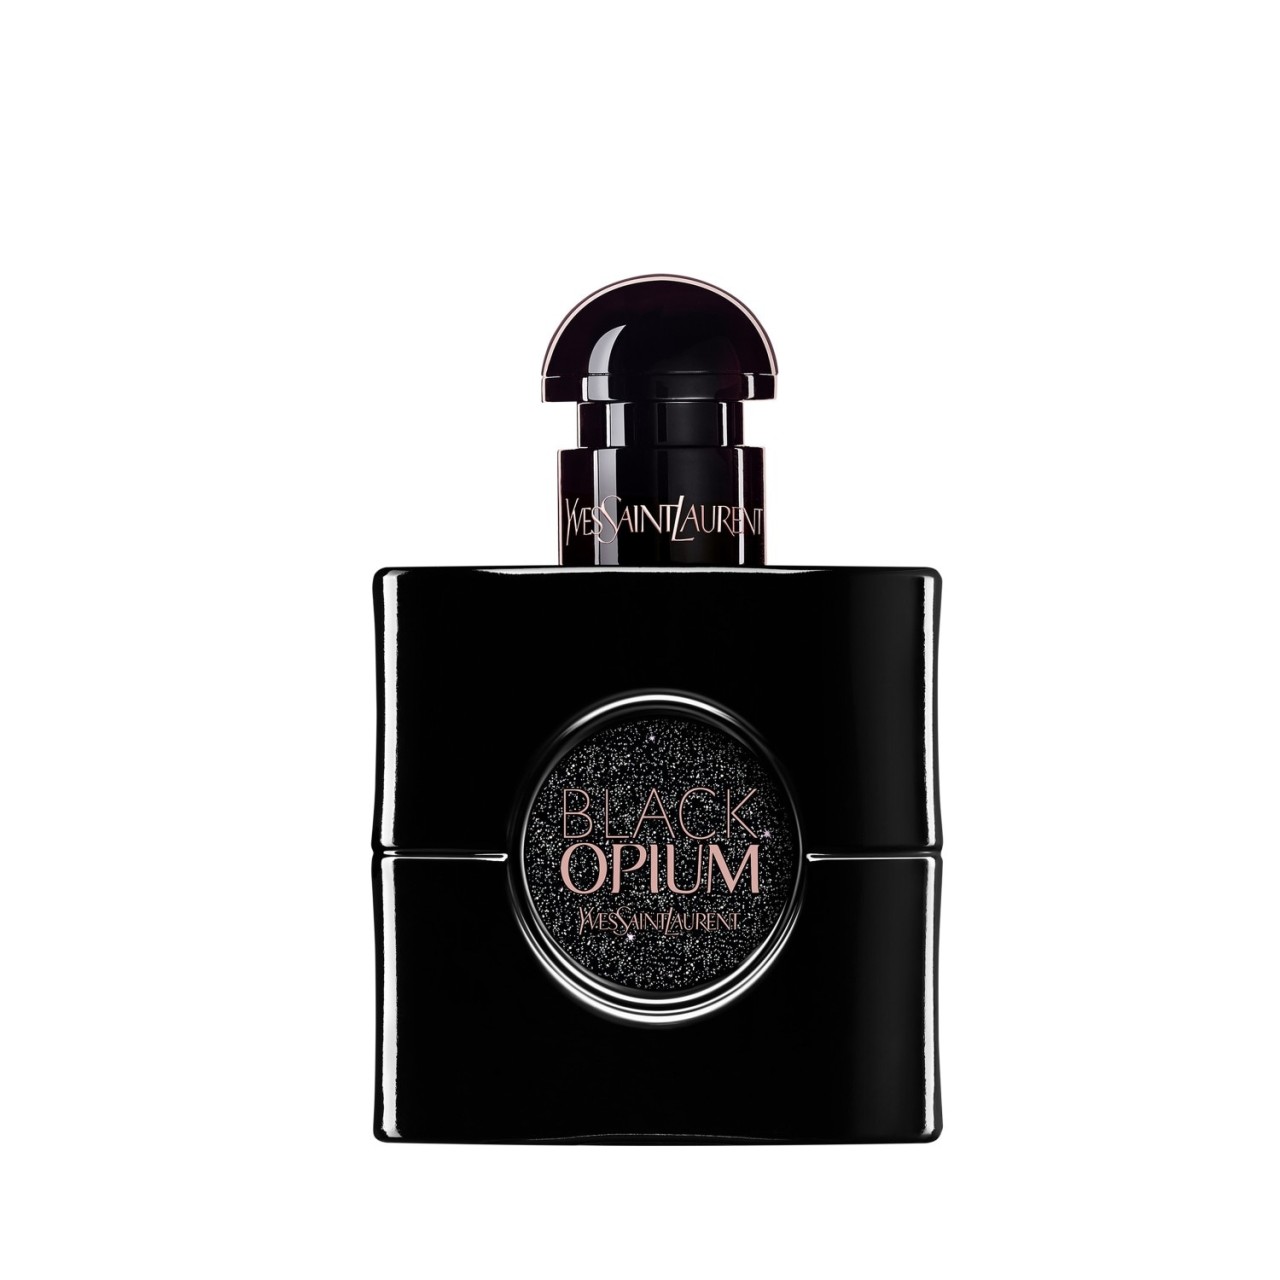 Yves Saint Laurent - Black Opium Le Parfum -  30 ml